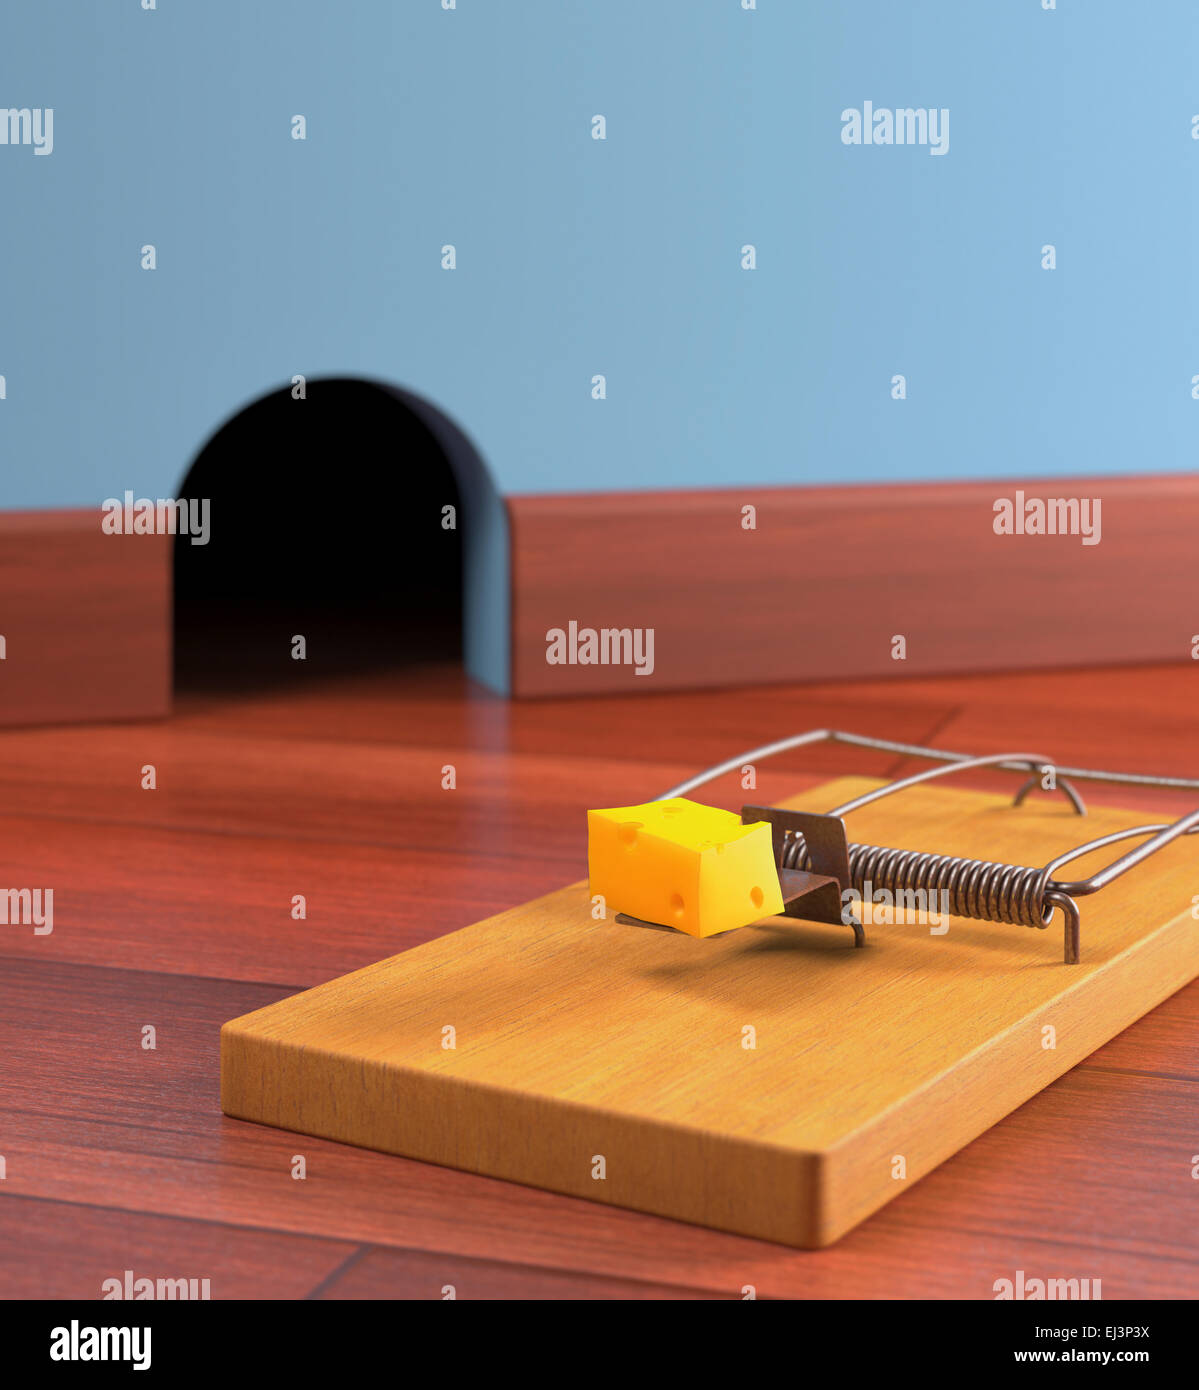 https://c8.alamy.com/comp/EJ3P3X/mouse-trap-on-the-floor-illustration-EJ3P3X.jpg